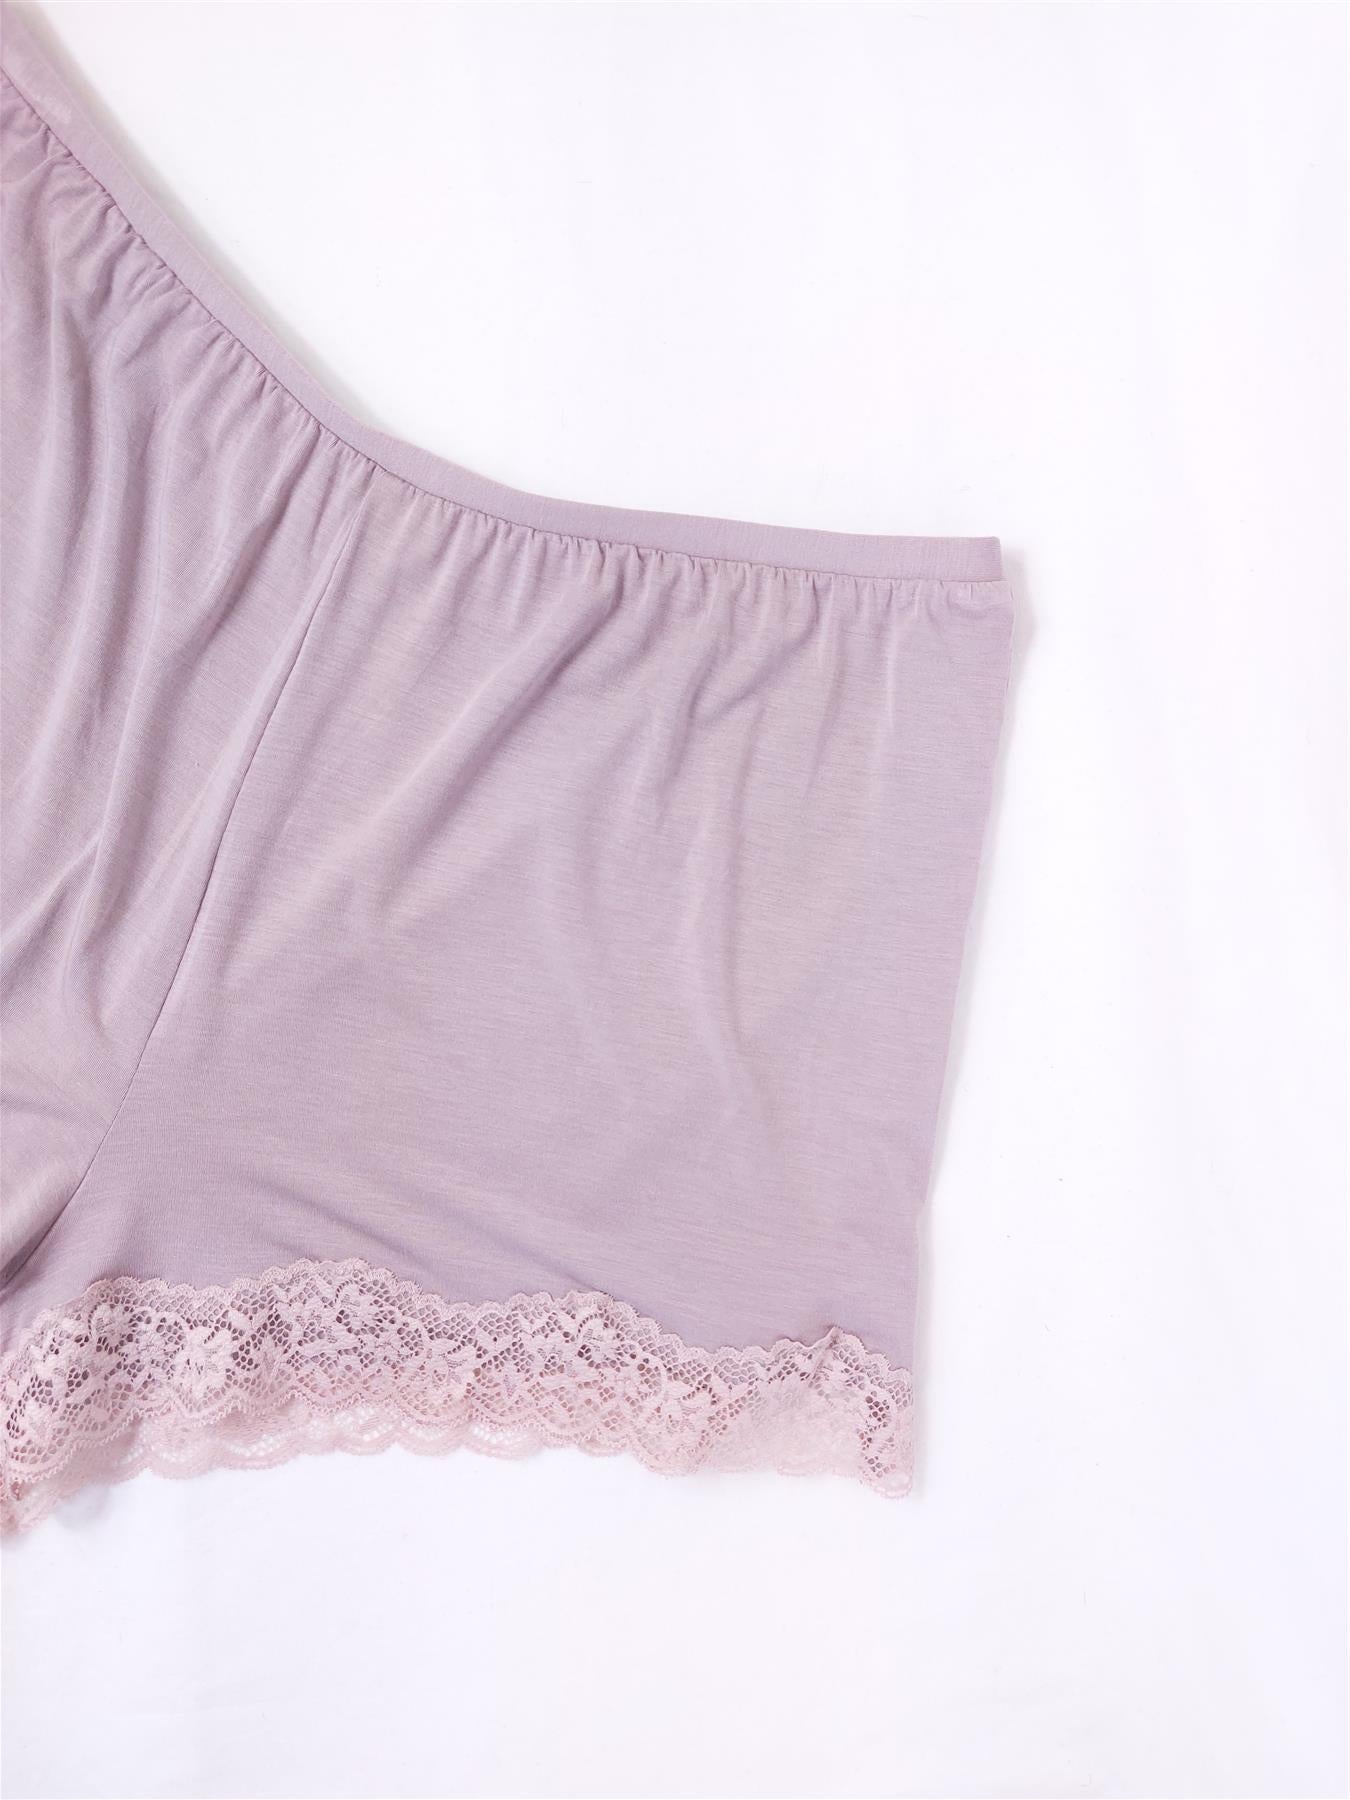 Women's Pyjama Bottoms Shorts Loungewear Soft Comfy Stretch Lace Trim Mauve